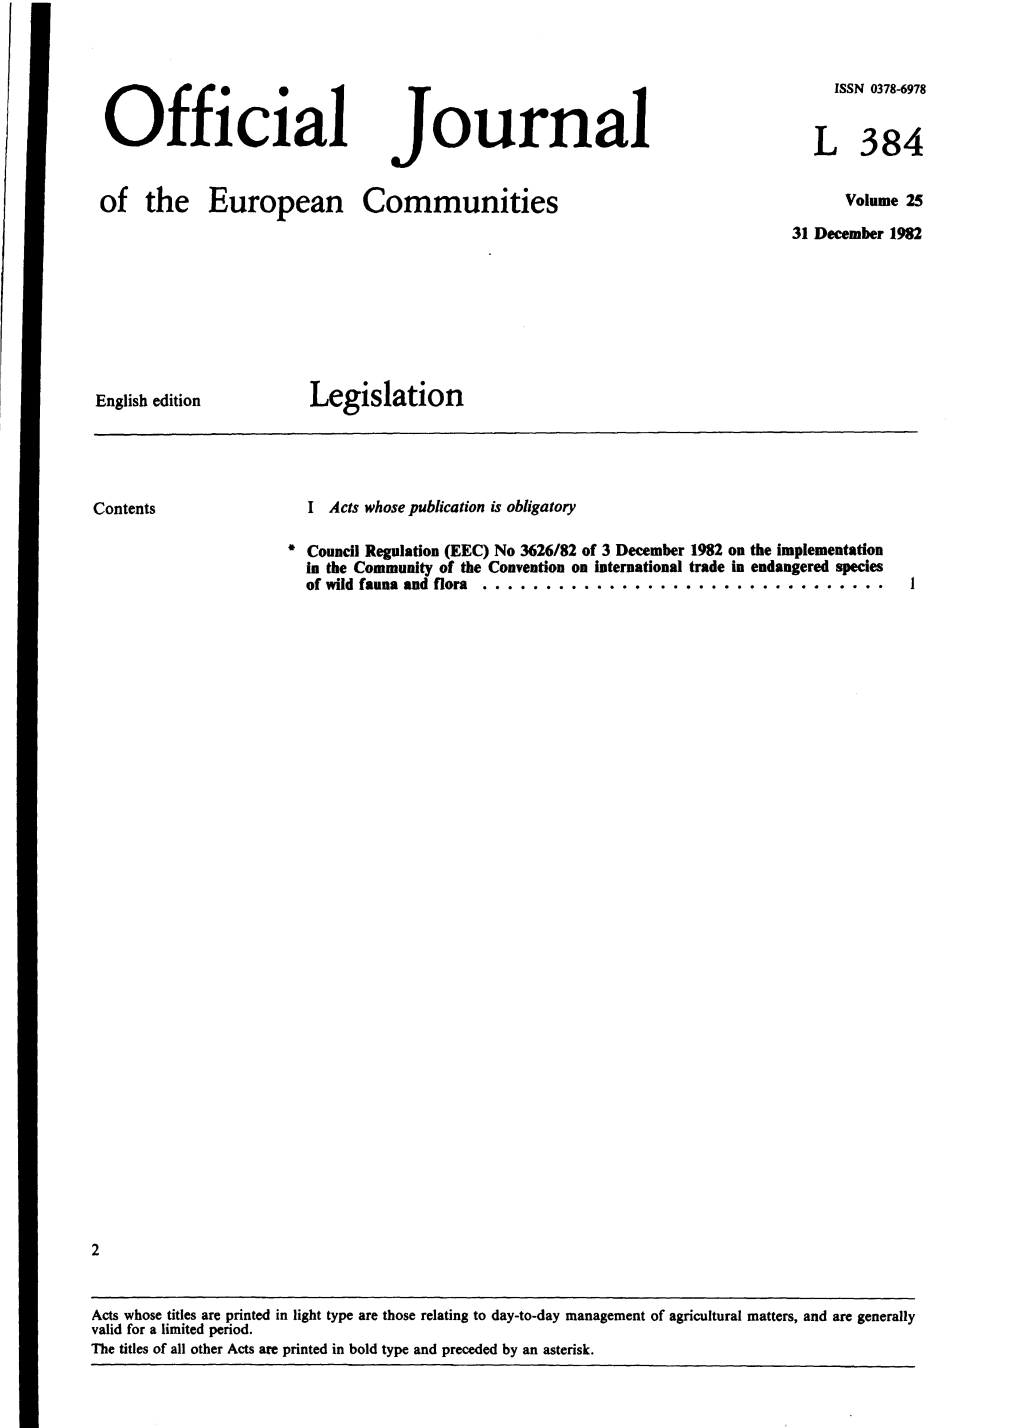 Official Journal L 384 of the European Communities Volume 25 31 December 1982